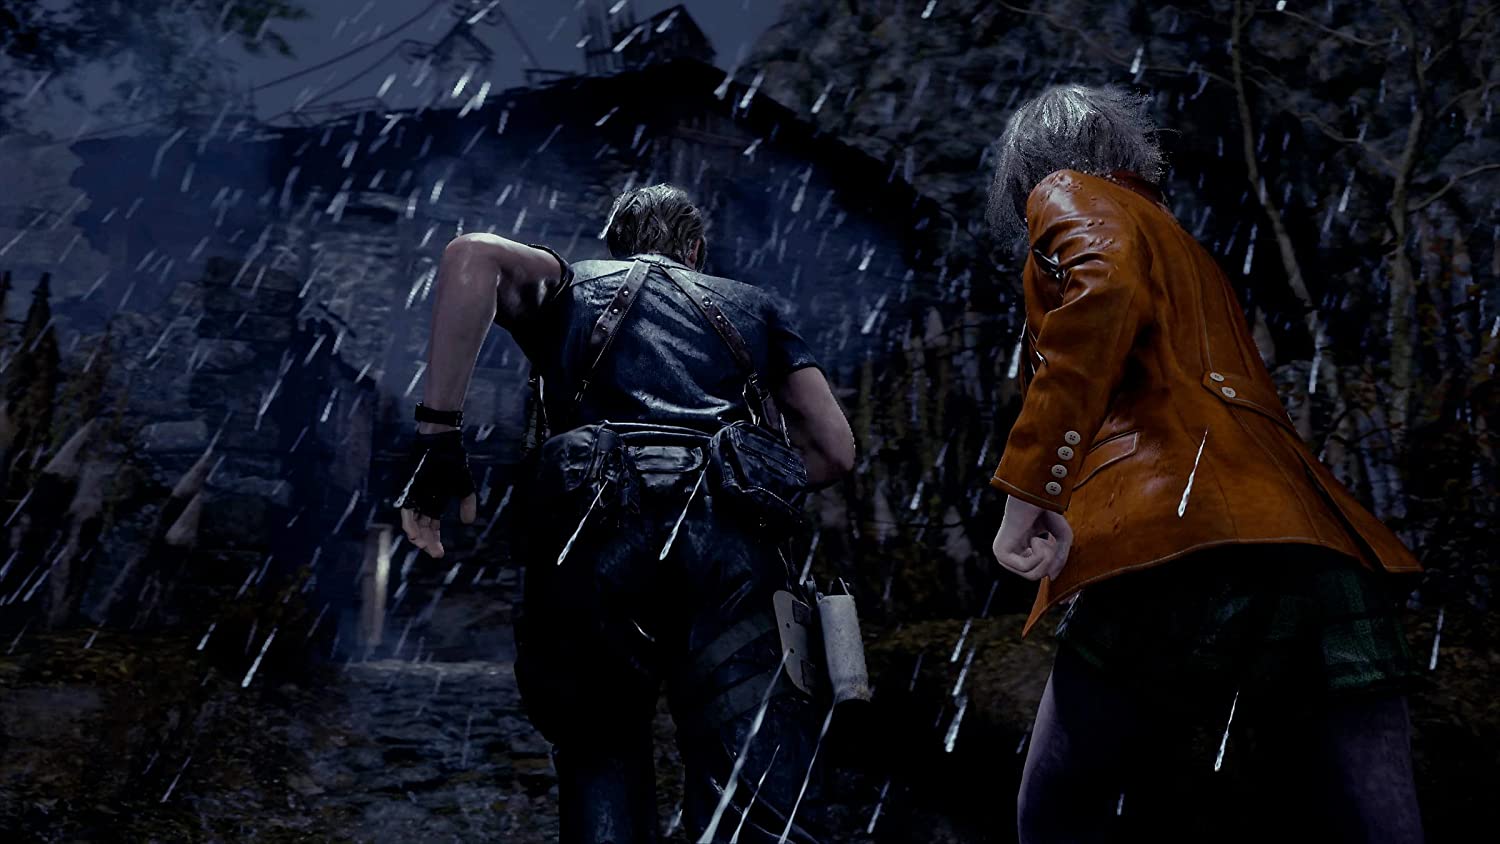 Resident Evil 4 (Remake) [Standard Edition], PS4